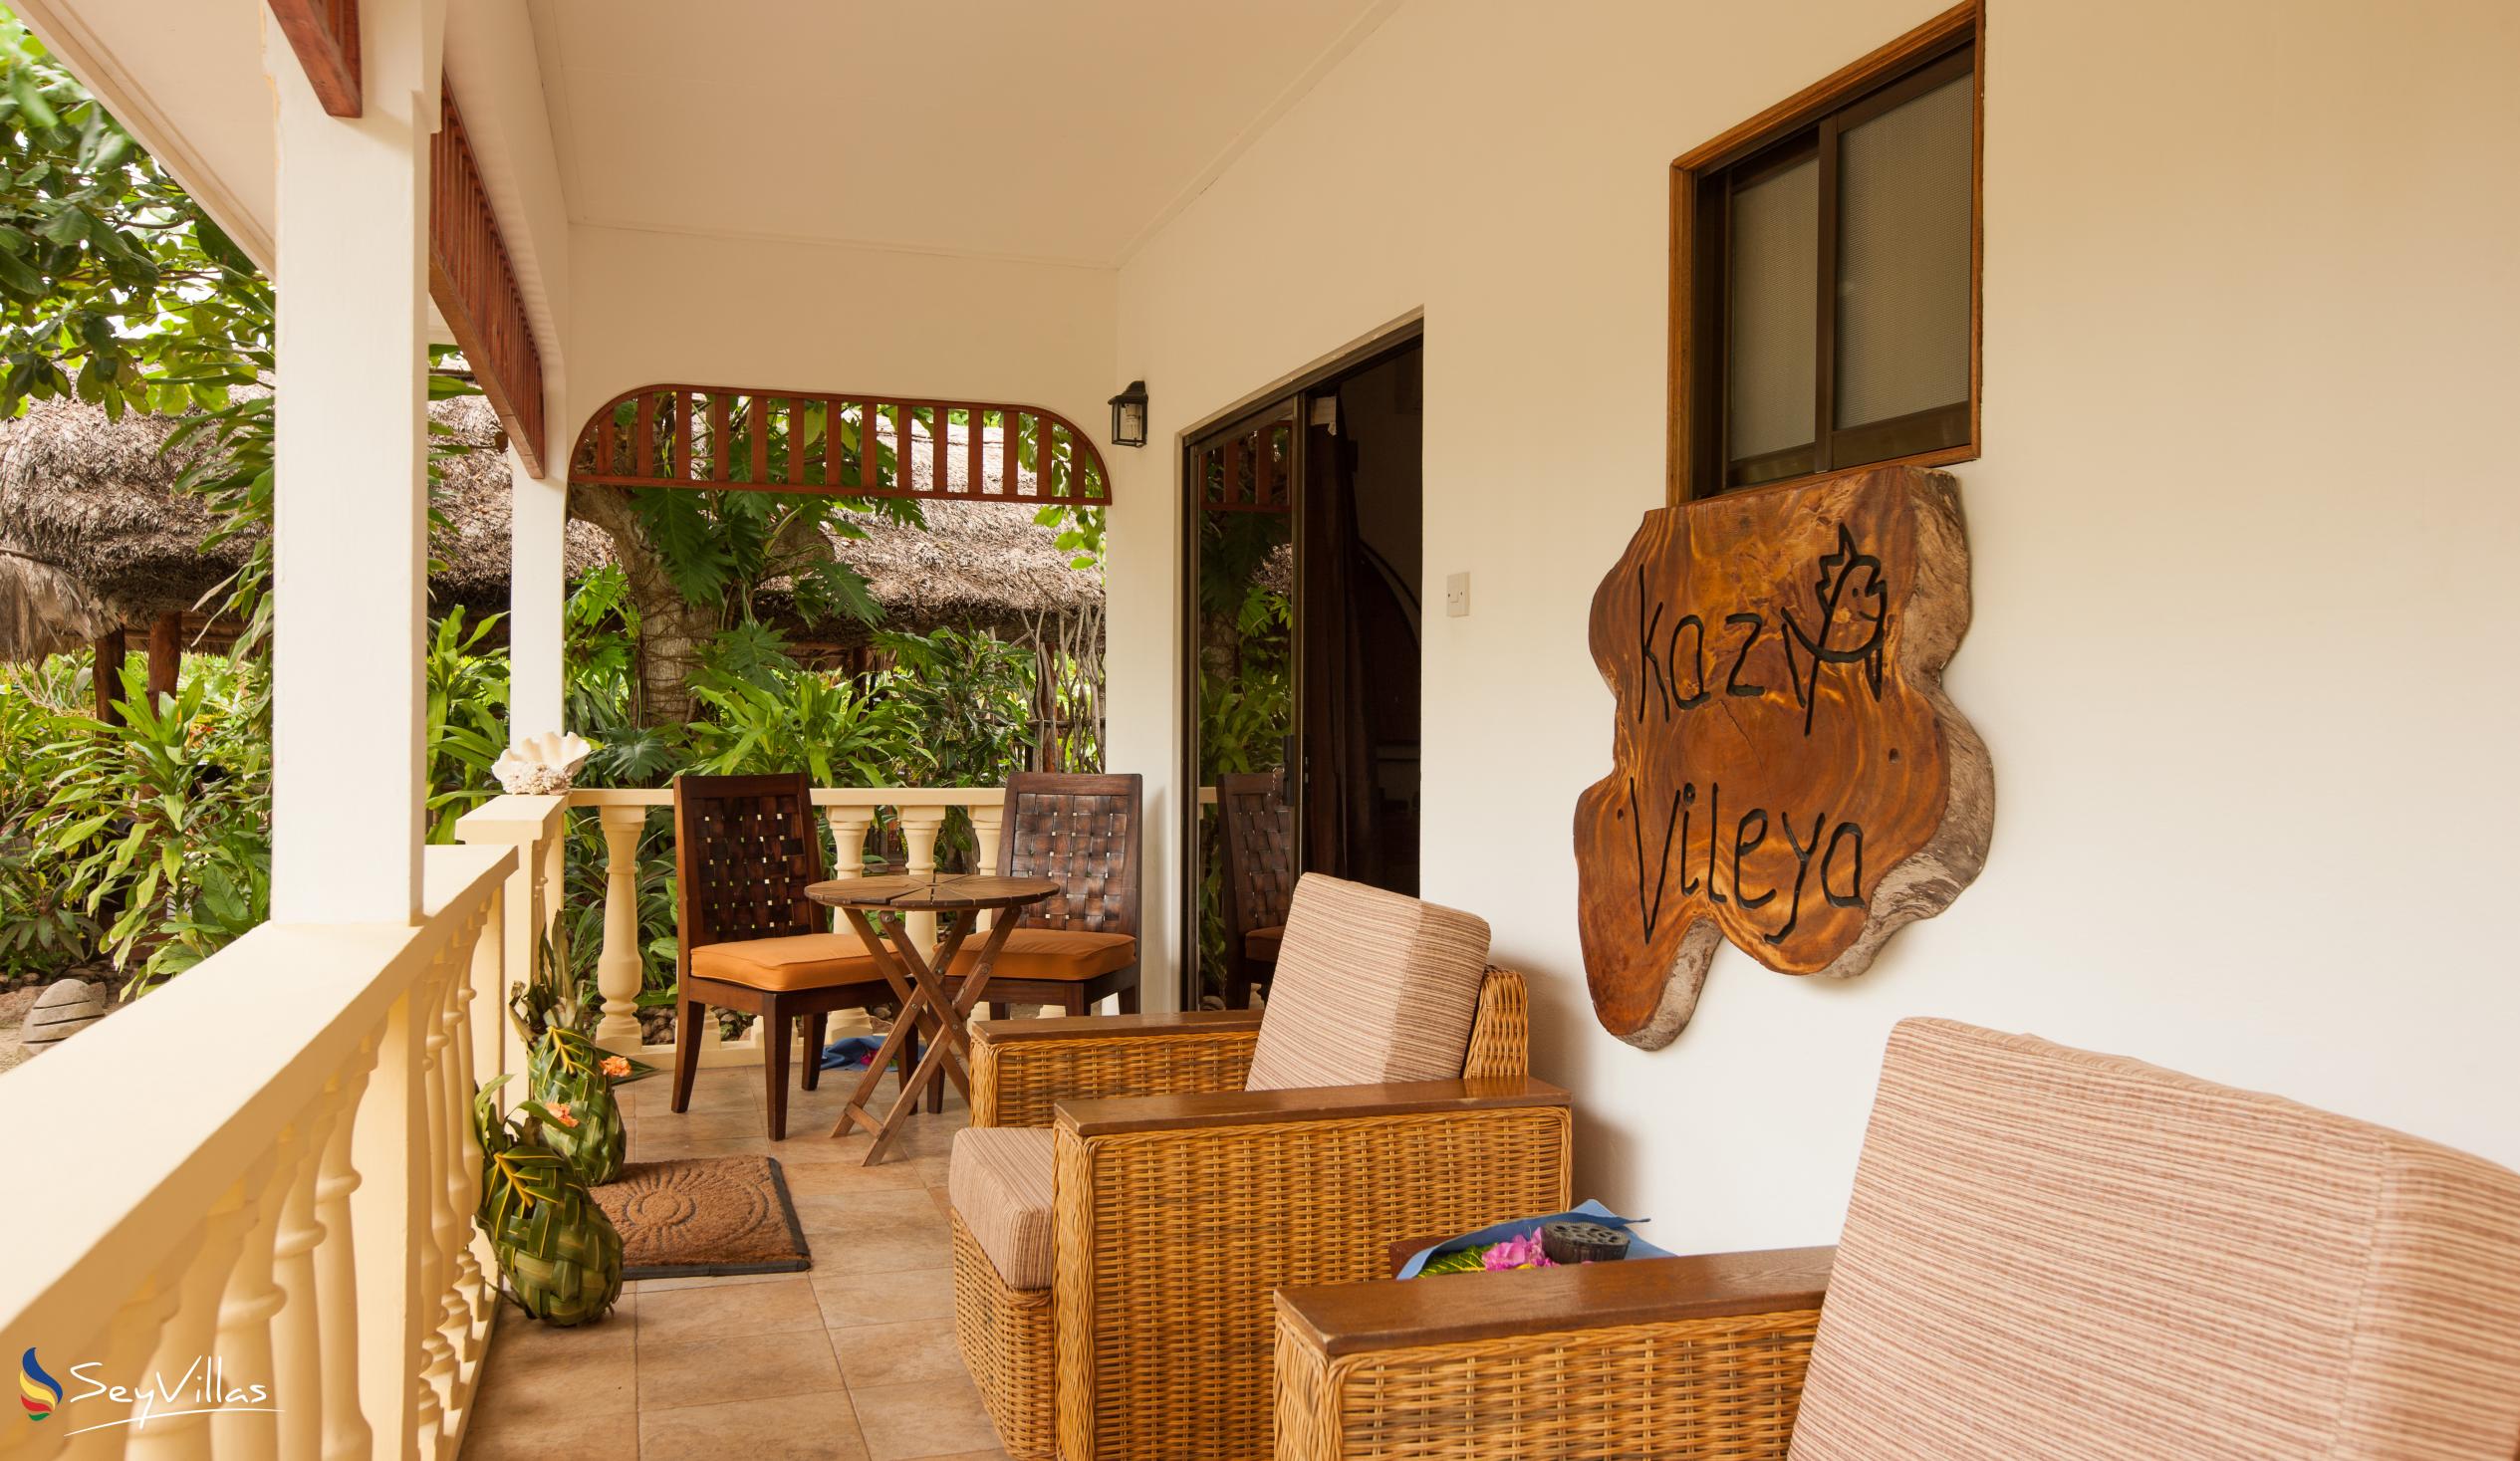 Foto 81: Domaine Les Rochers - Bungalow Kaz Vileya mit 1 Schlafzimmer - La Digue (Seychellen)